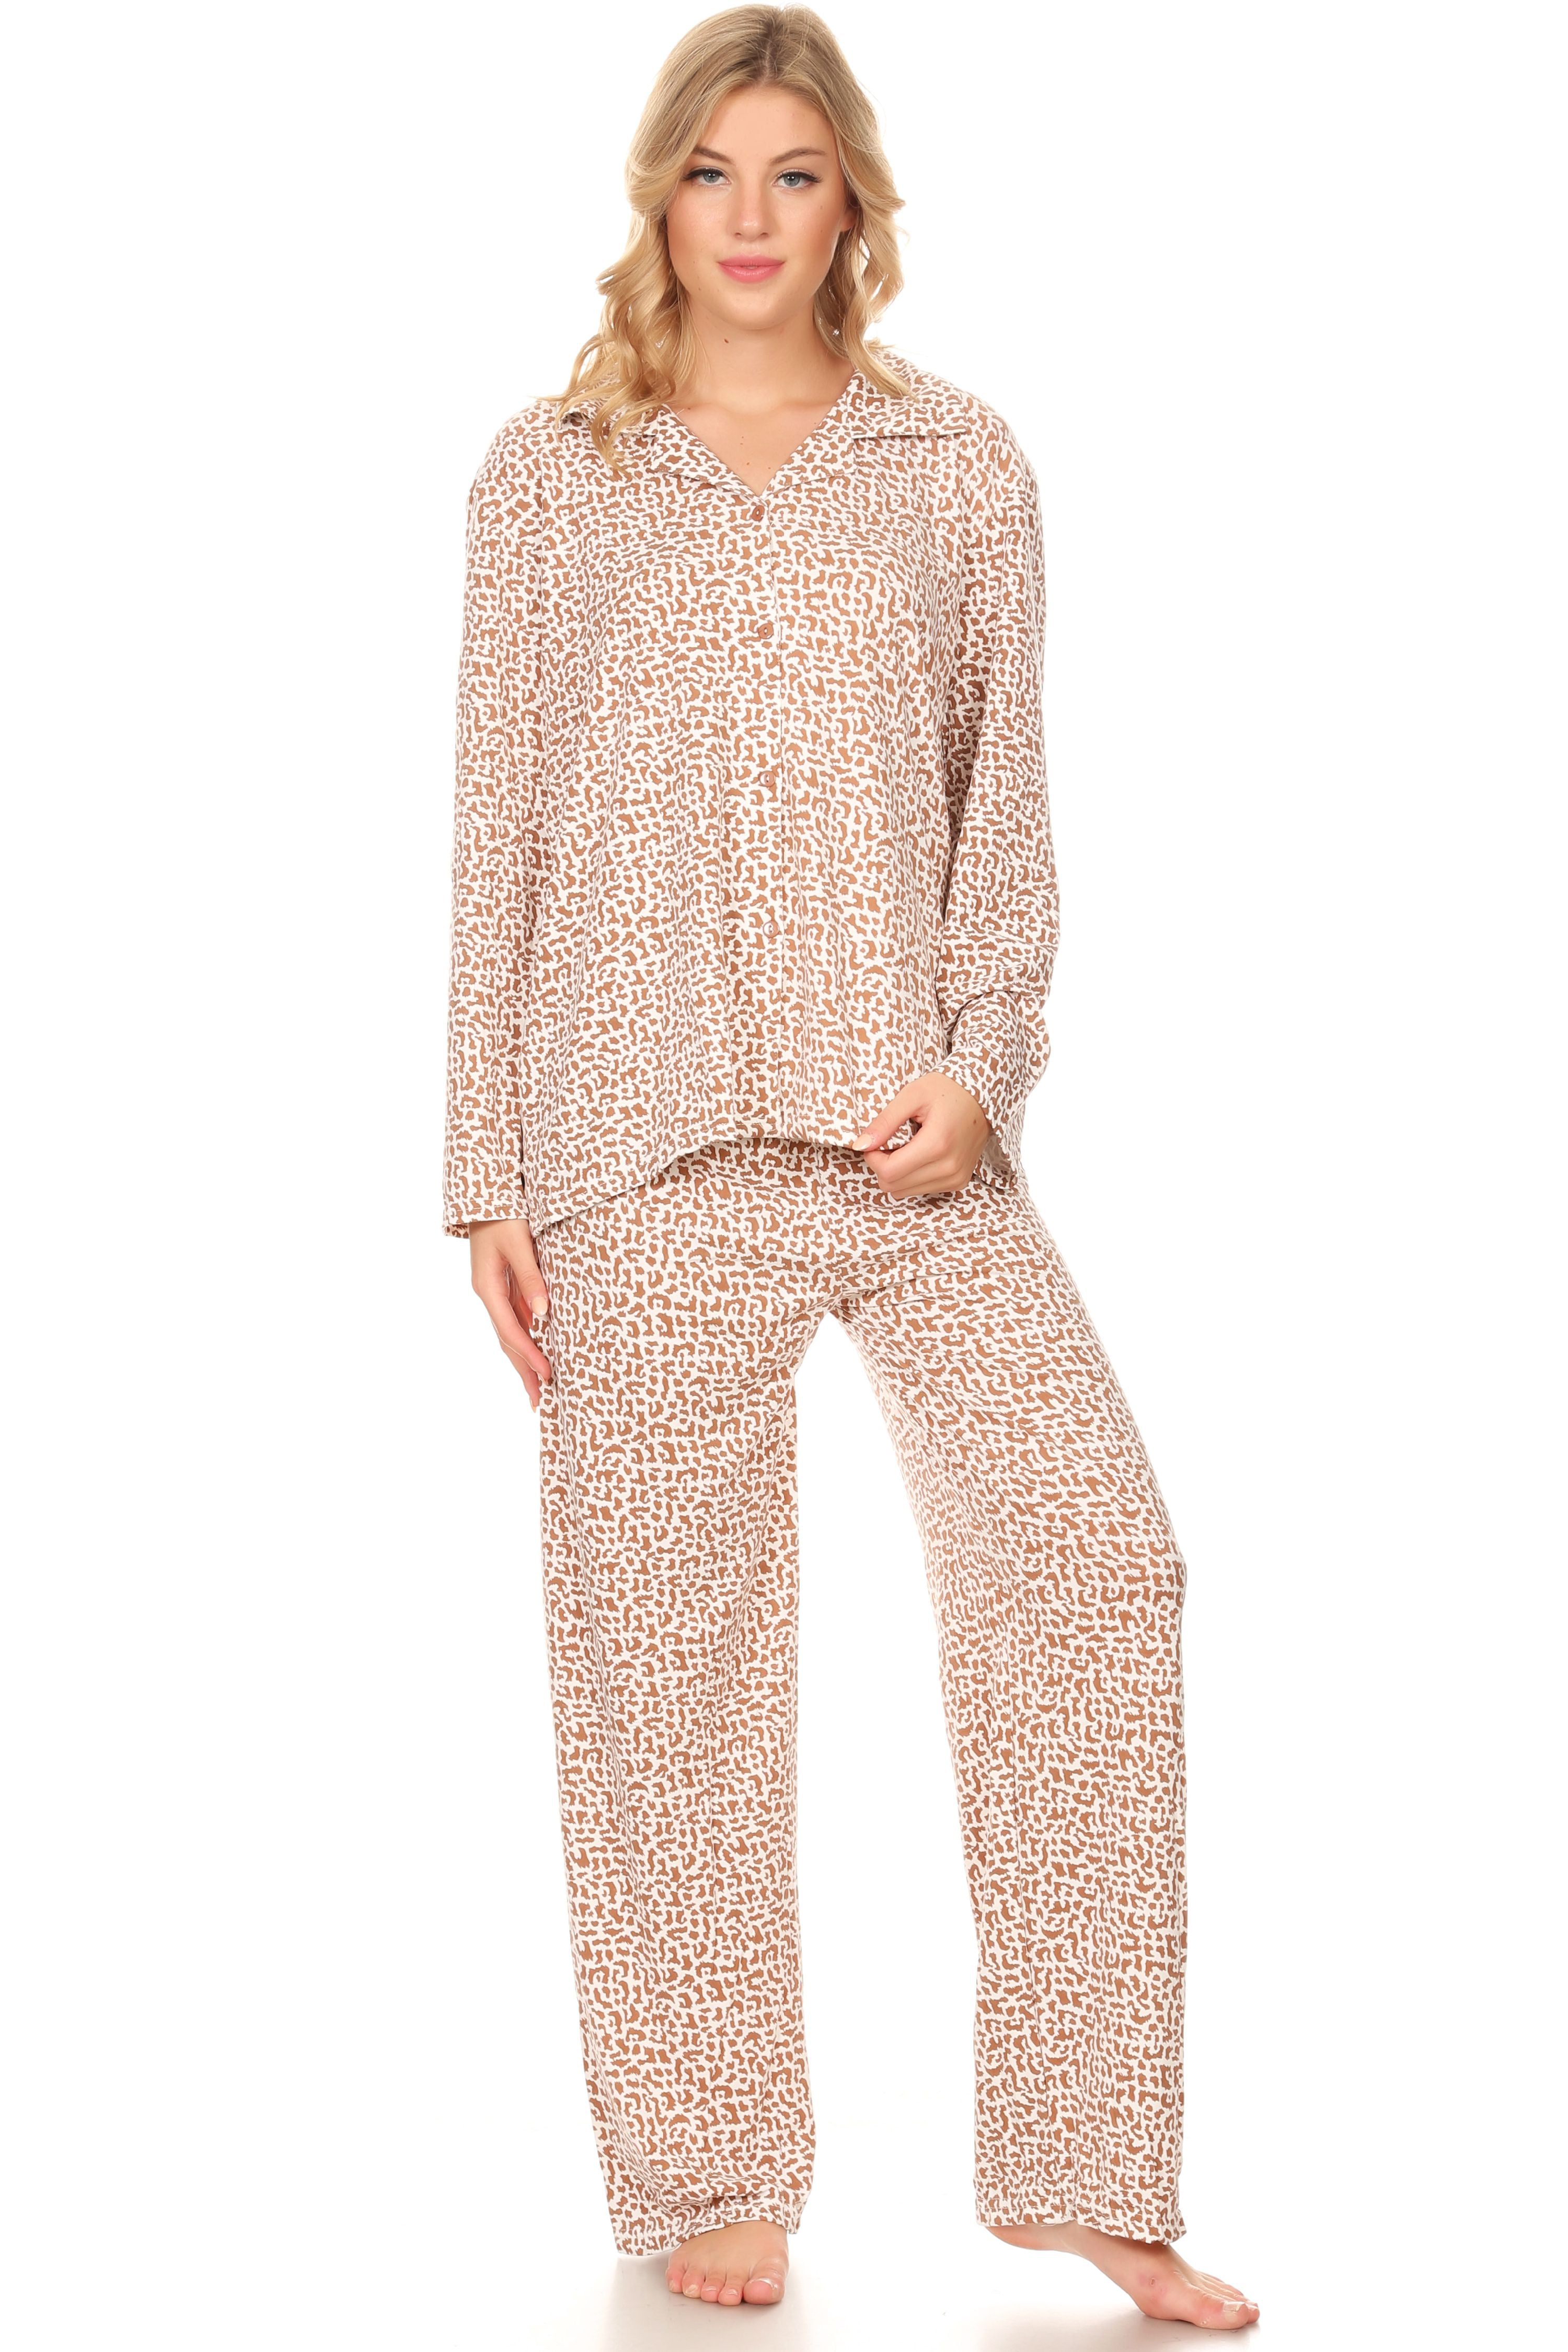 Fashion Brands Group - Z2153 Womens Sleepwear Pajamas Woman Long Sleeve ...